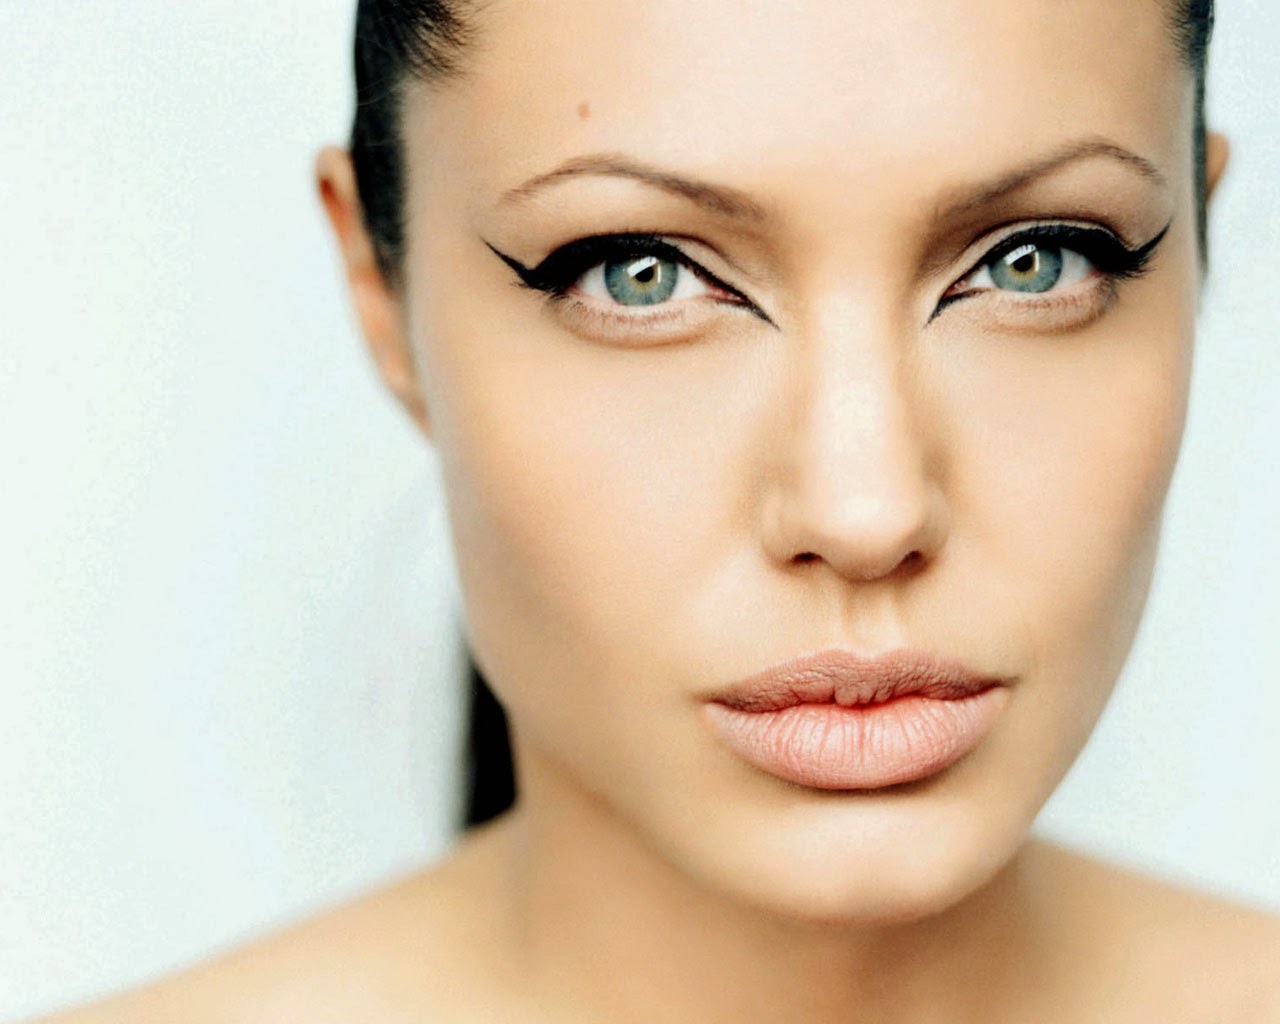 HD Wallpapers Blog: Angelina Jolie HD Wallpaper,Images,Pics